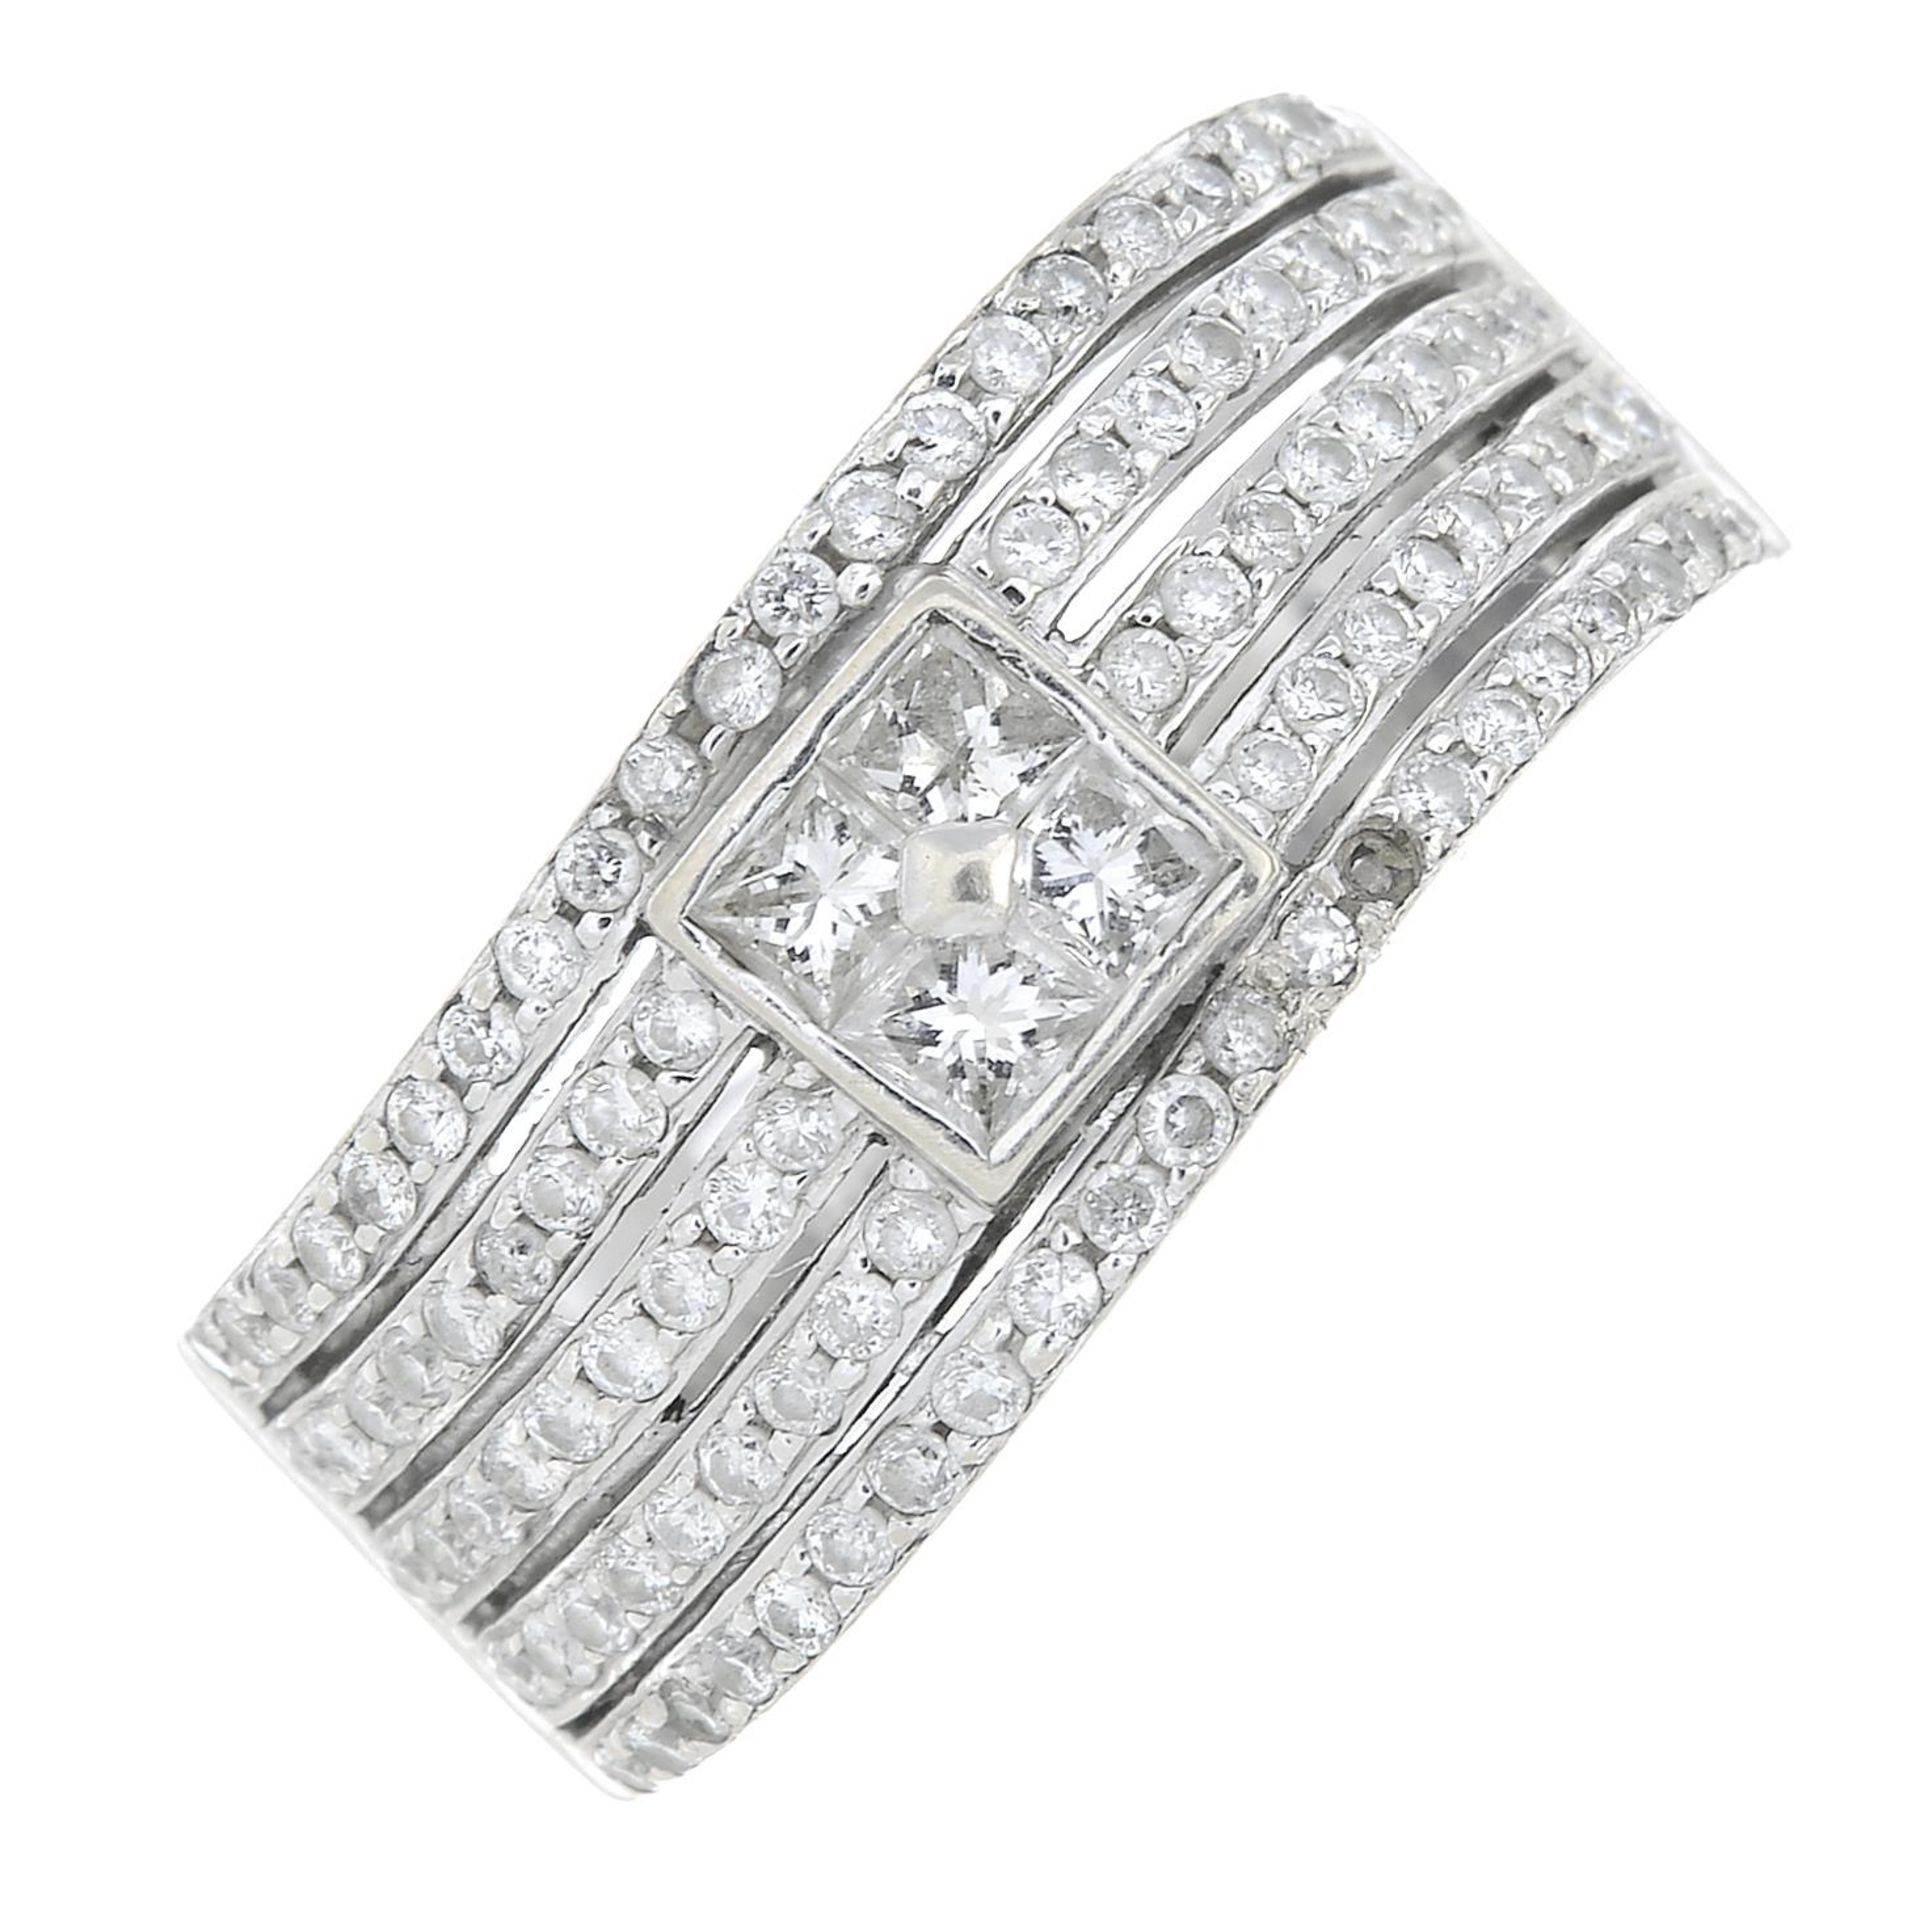 A square-shape and brilliant-cut diamond dress ring.